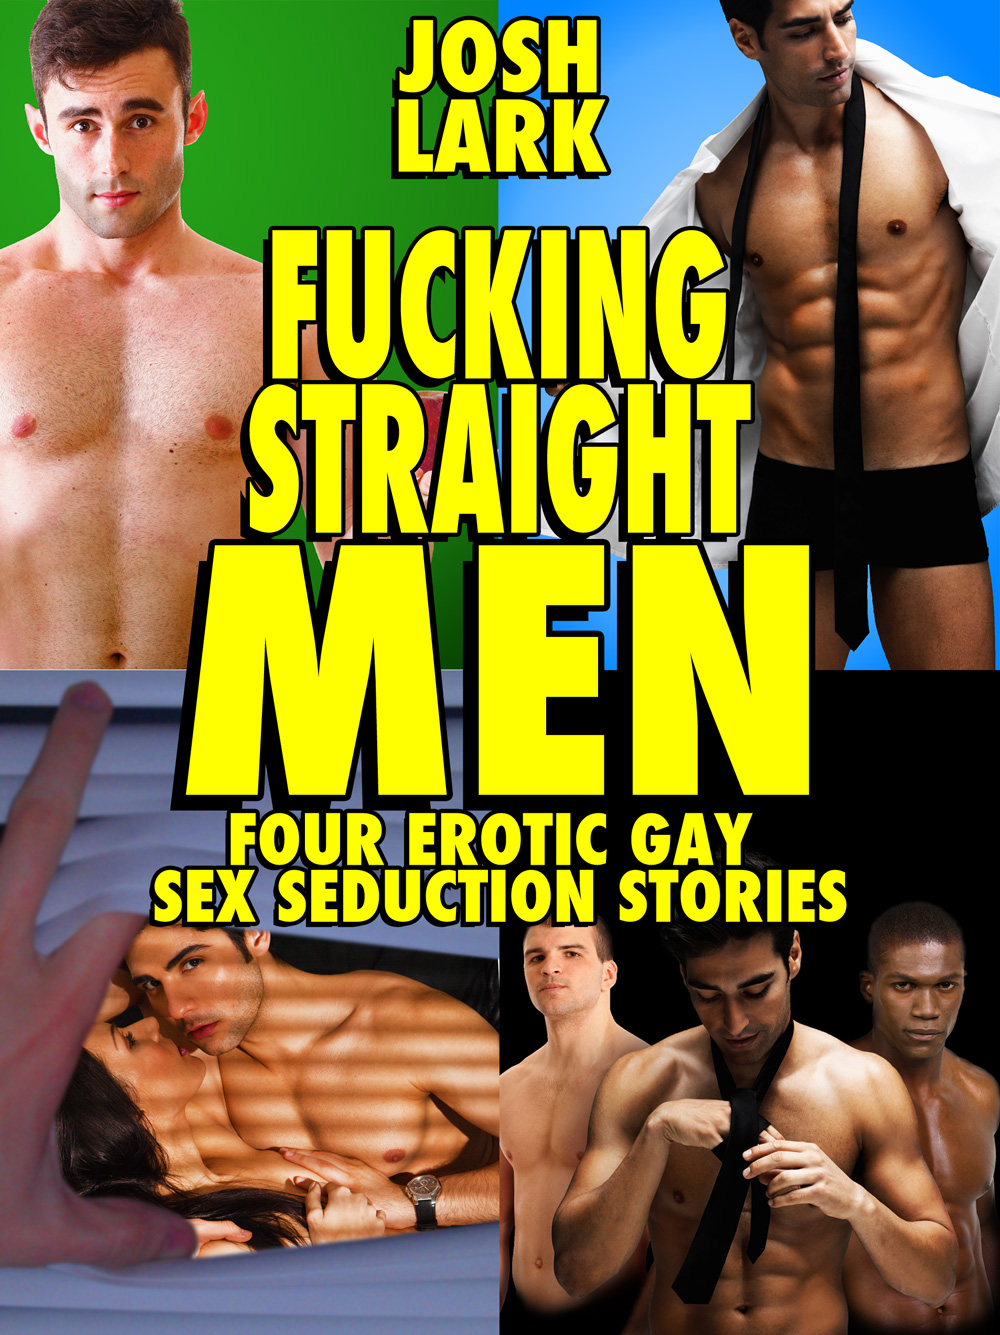 Erotic gay sex stories